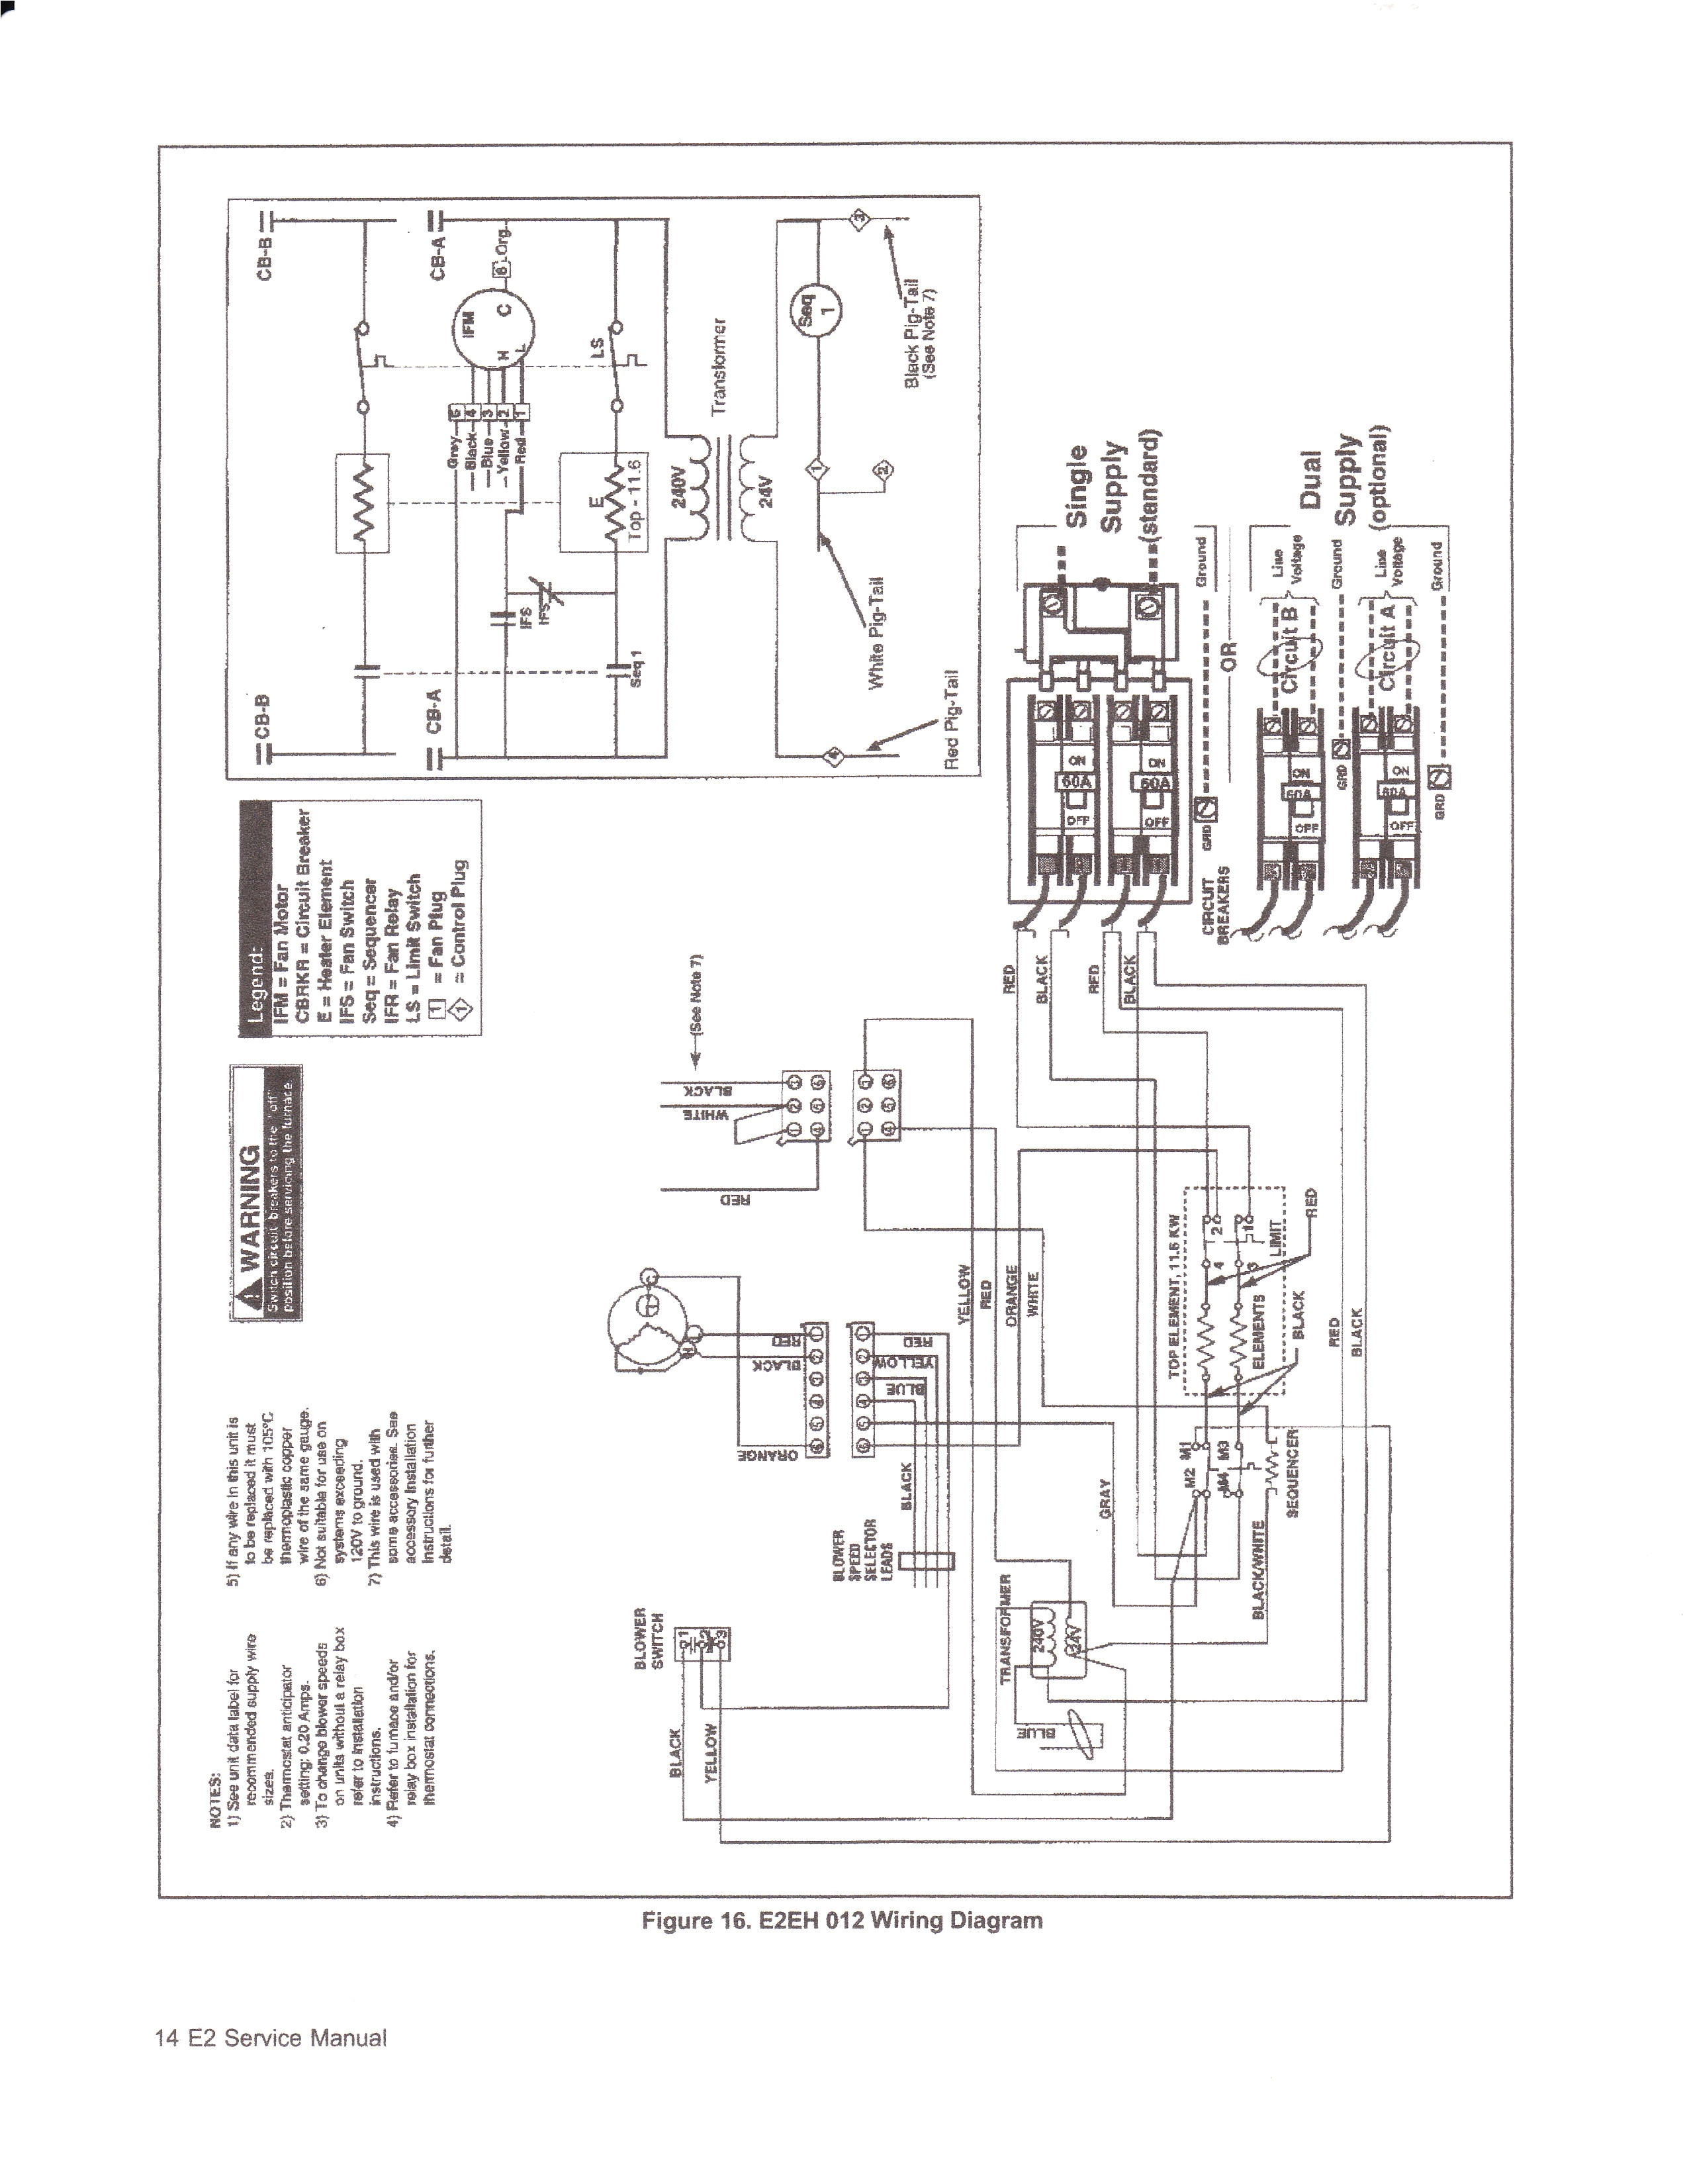 wiring diagram 3500a816 wiring diagram toolbox3500a816 wiring diagram wiring diagram centre wiring diagram 3500a816